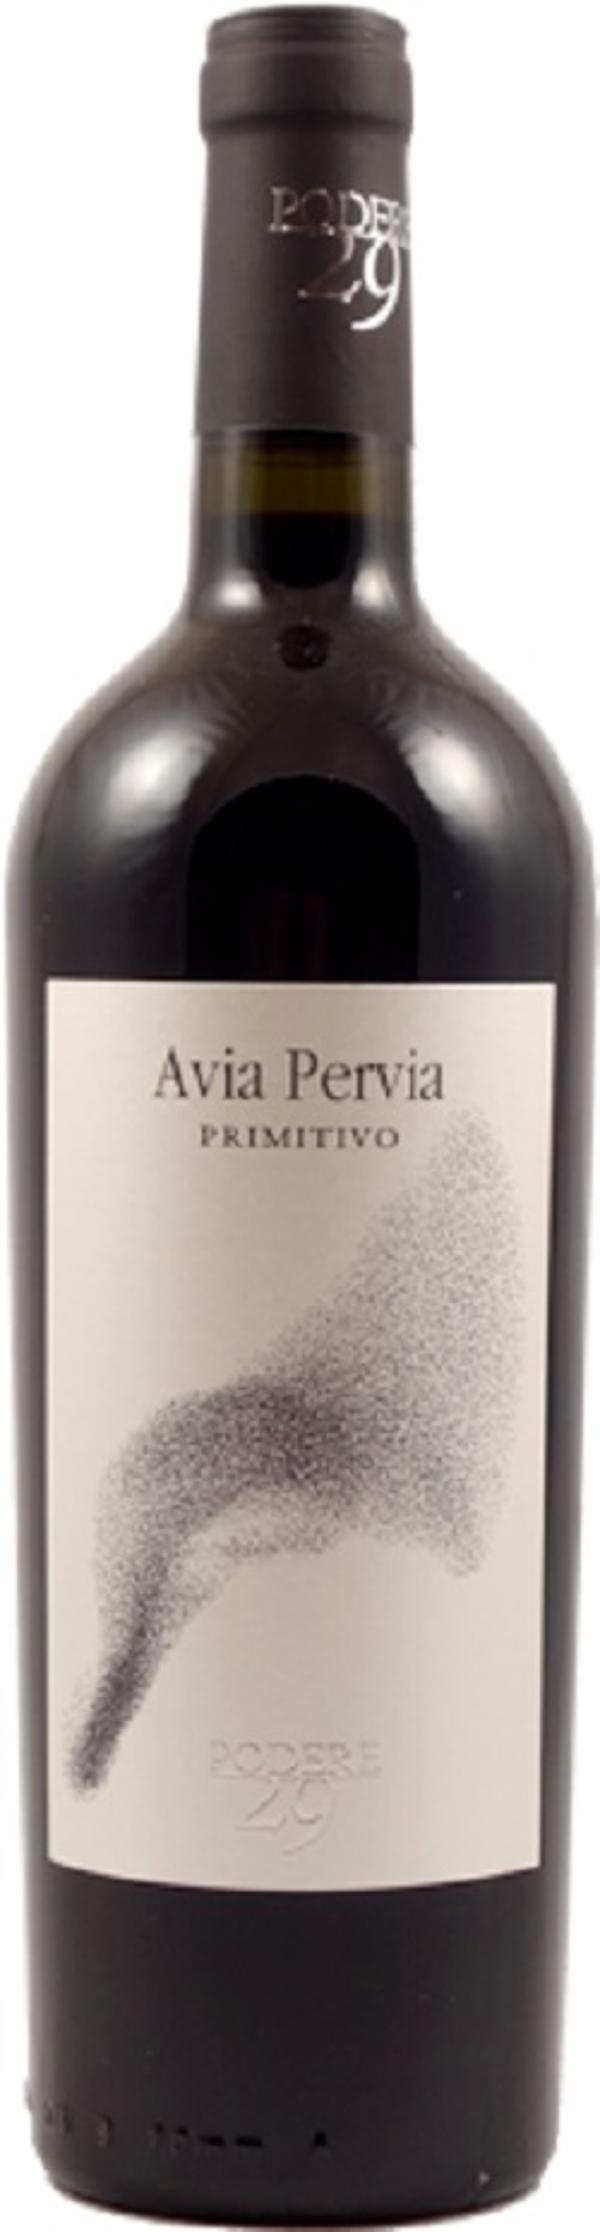 Produktfoto zu Avia Pervia Primitivo, 0,75 l